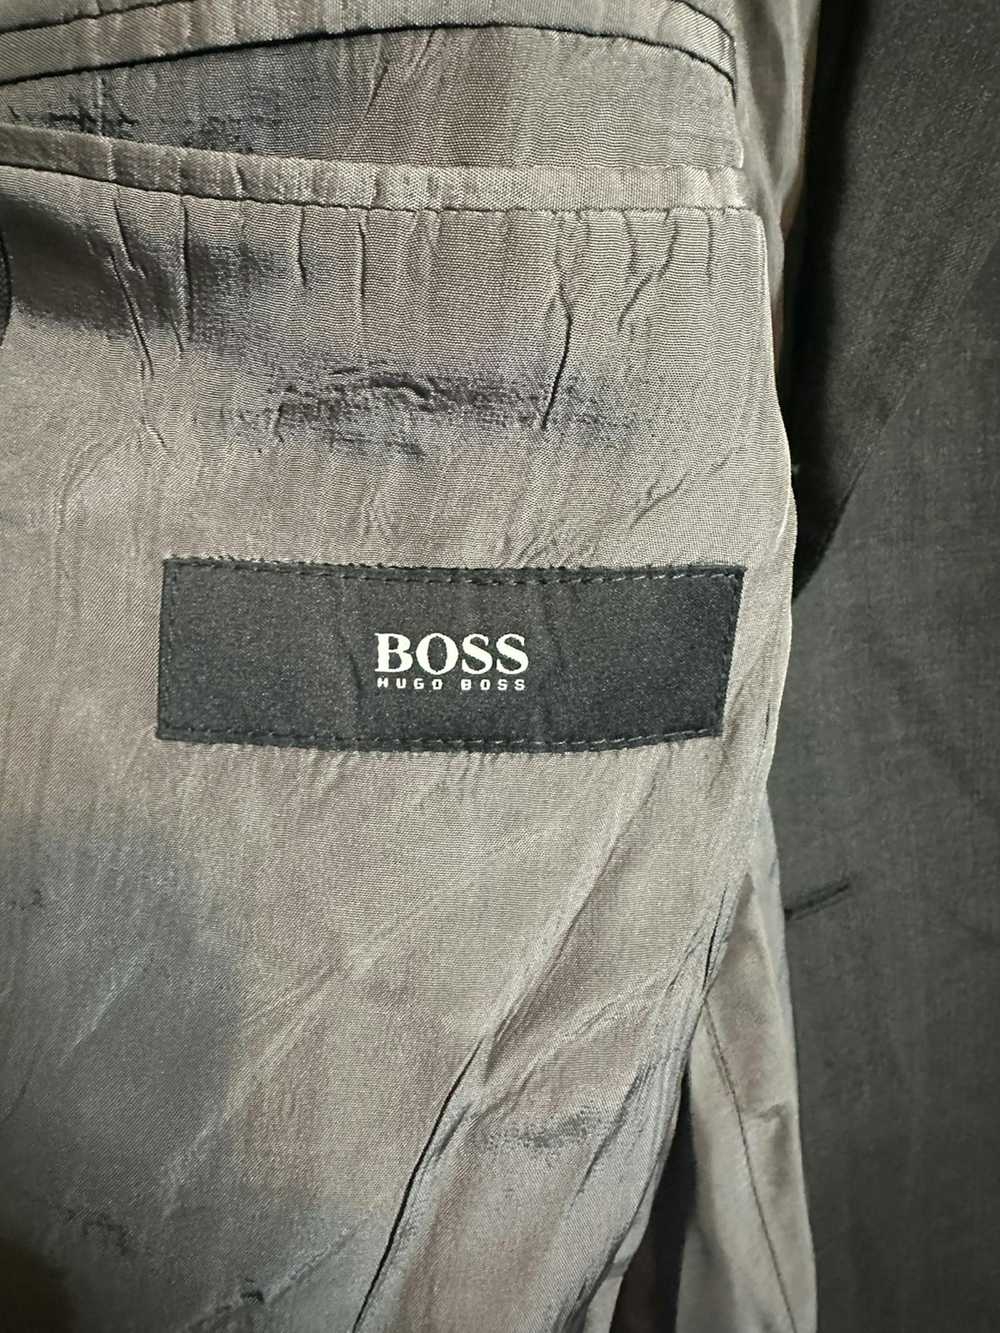 Hugo Boss Textured gray 2pc USA-made suit by HUGO… - image 8